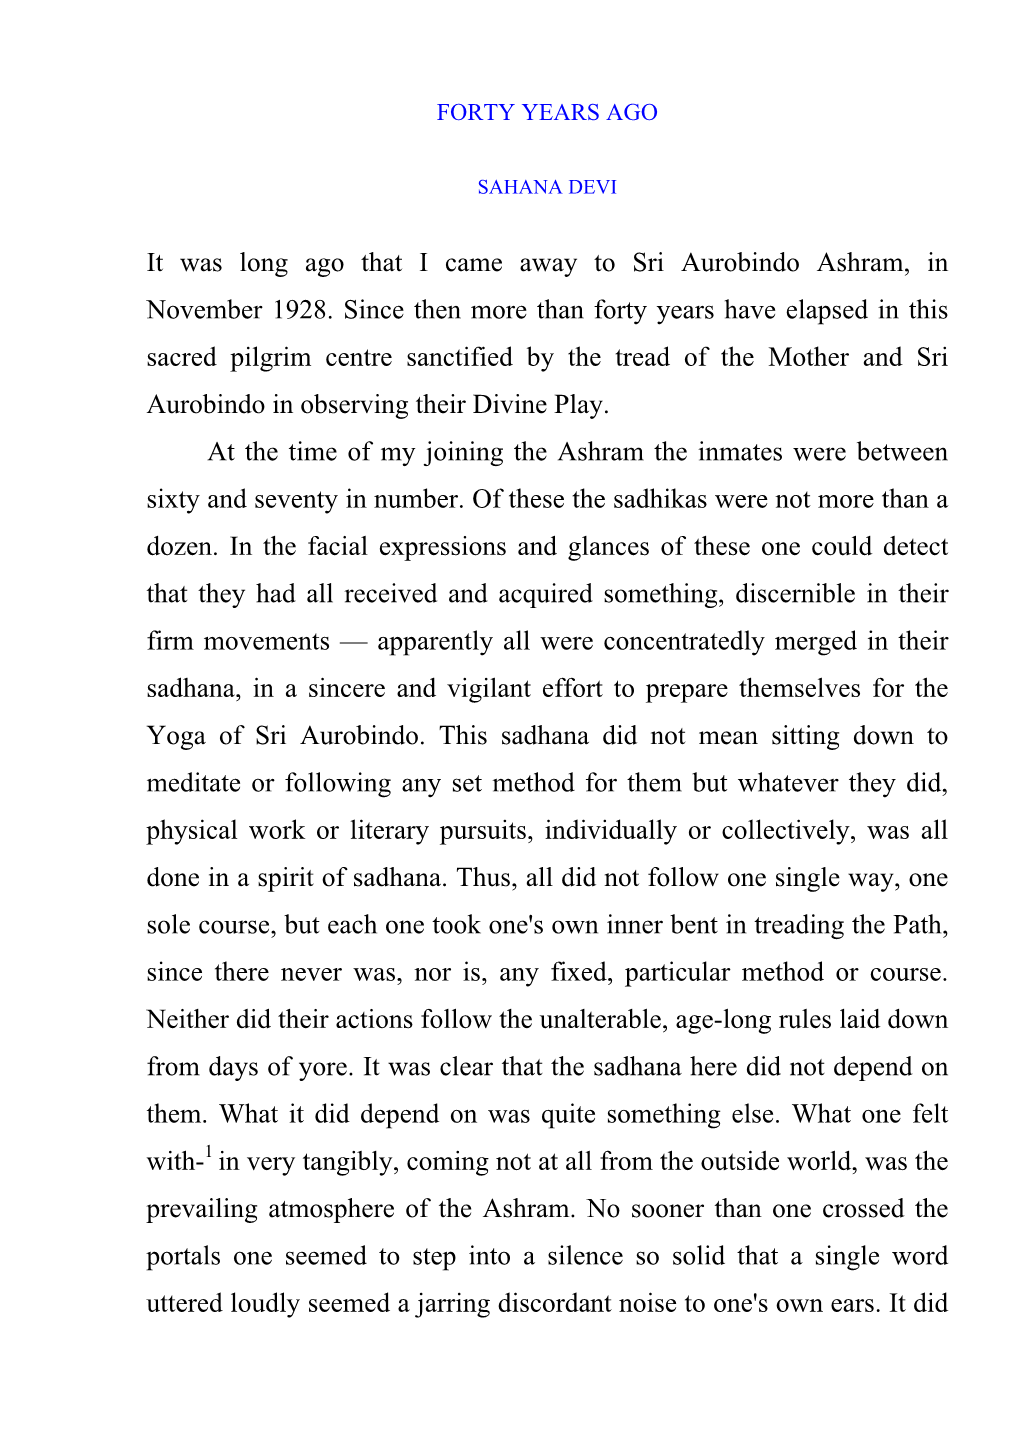 It Was Long Ago That I Came Away to Sri Aurobindo Ashram, in November 1928